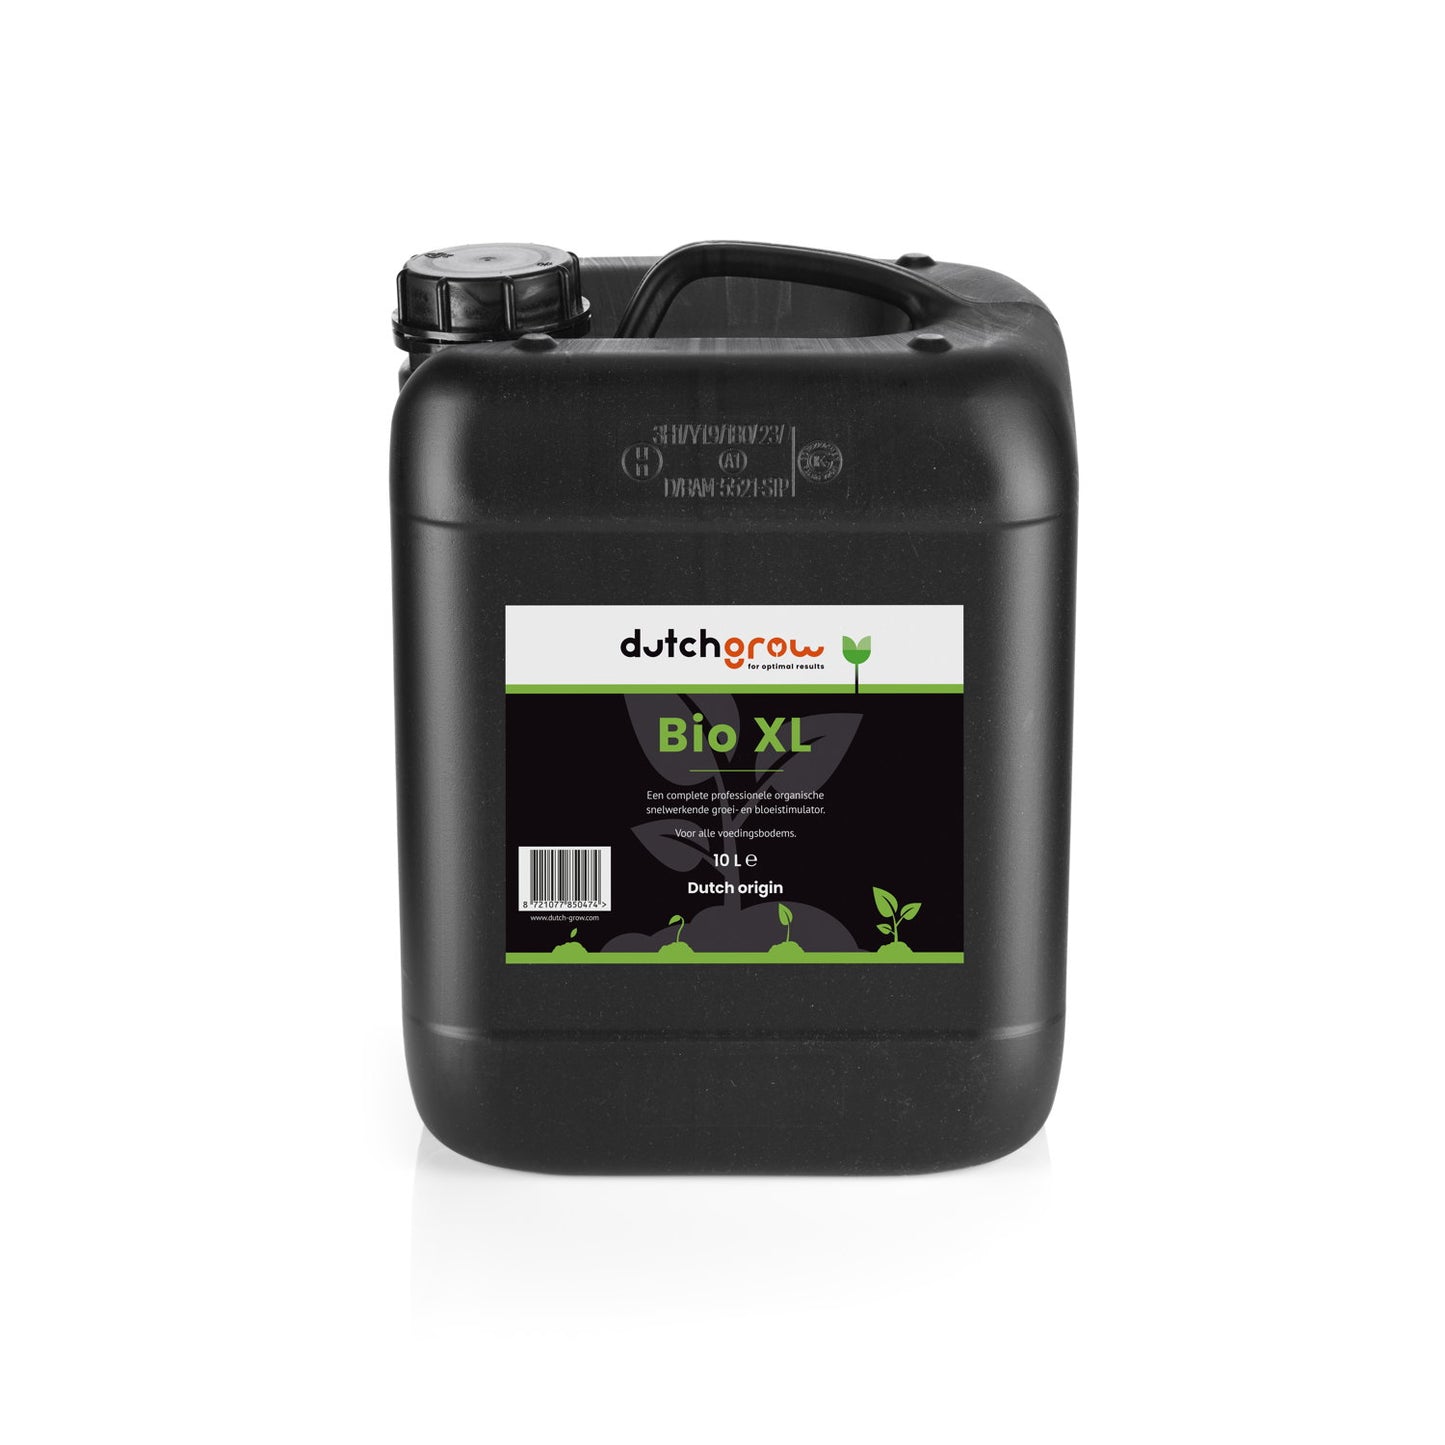 DutchGrow Bio XL 10 liter